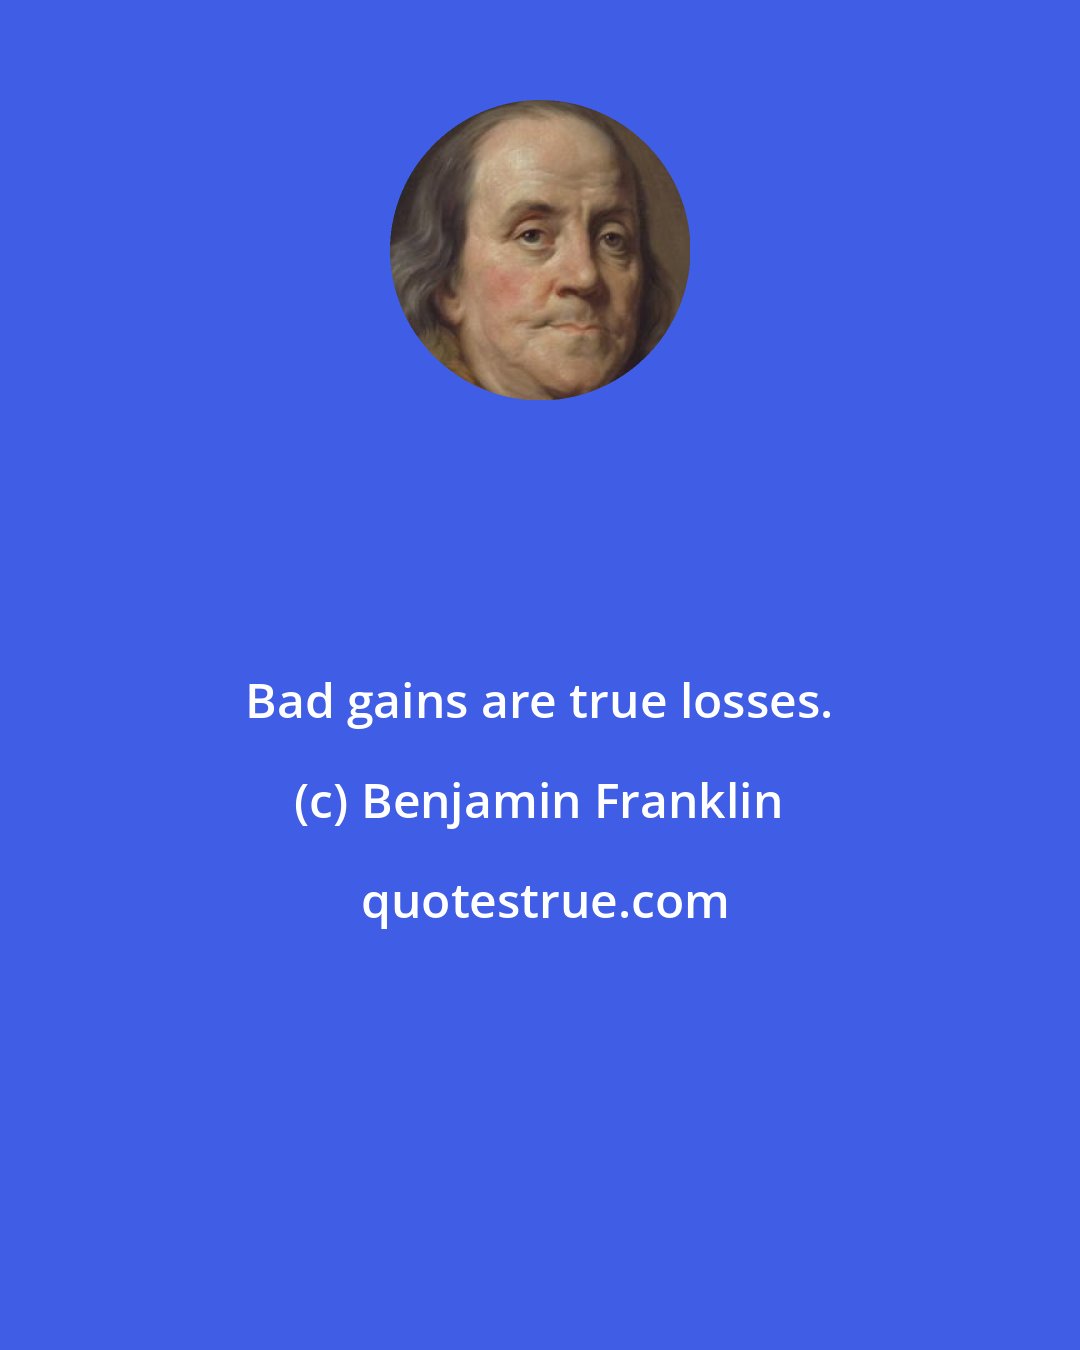 Benjamin Franklin: Bad gains are true losses.